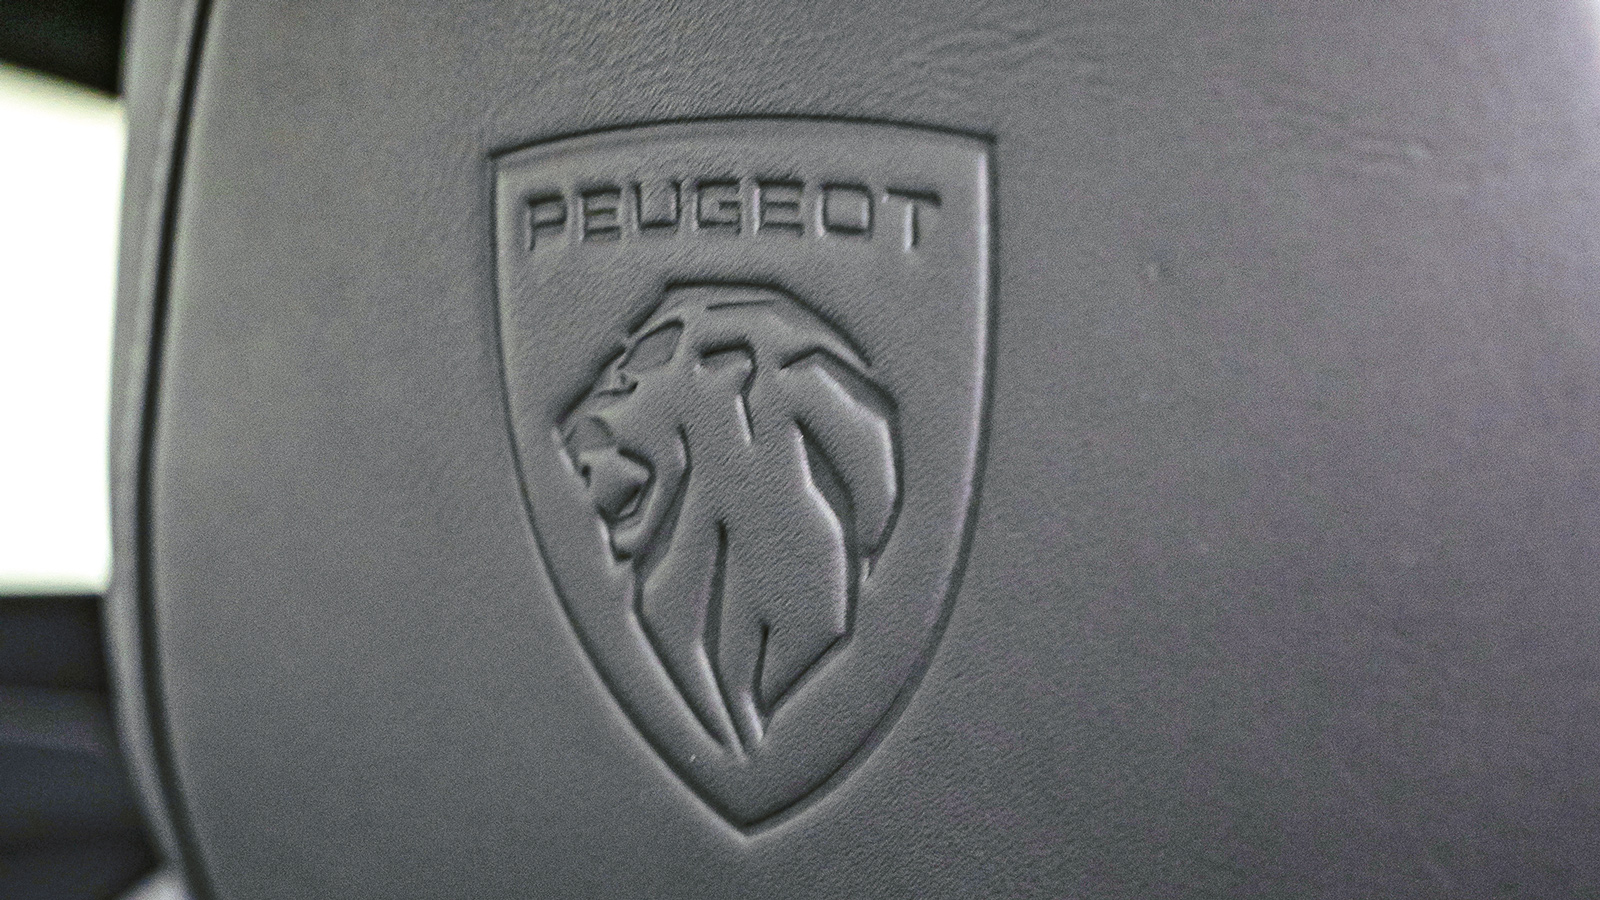 Premium ακόμα και τα προσκέφαλα, όπου είναι ανάγλυφο το έμβλημα της Peugeot